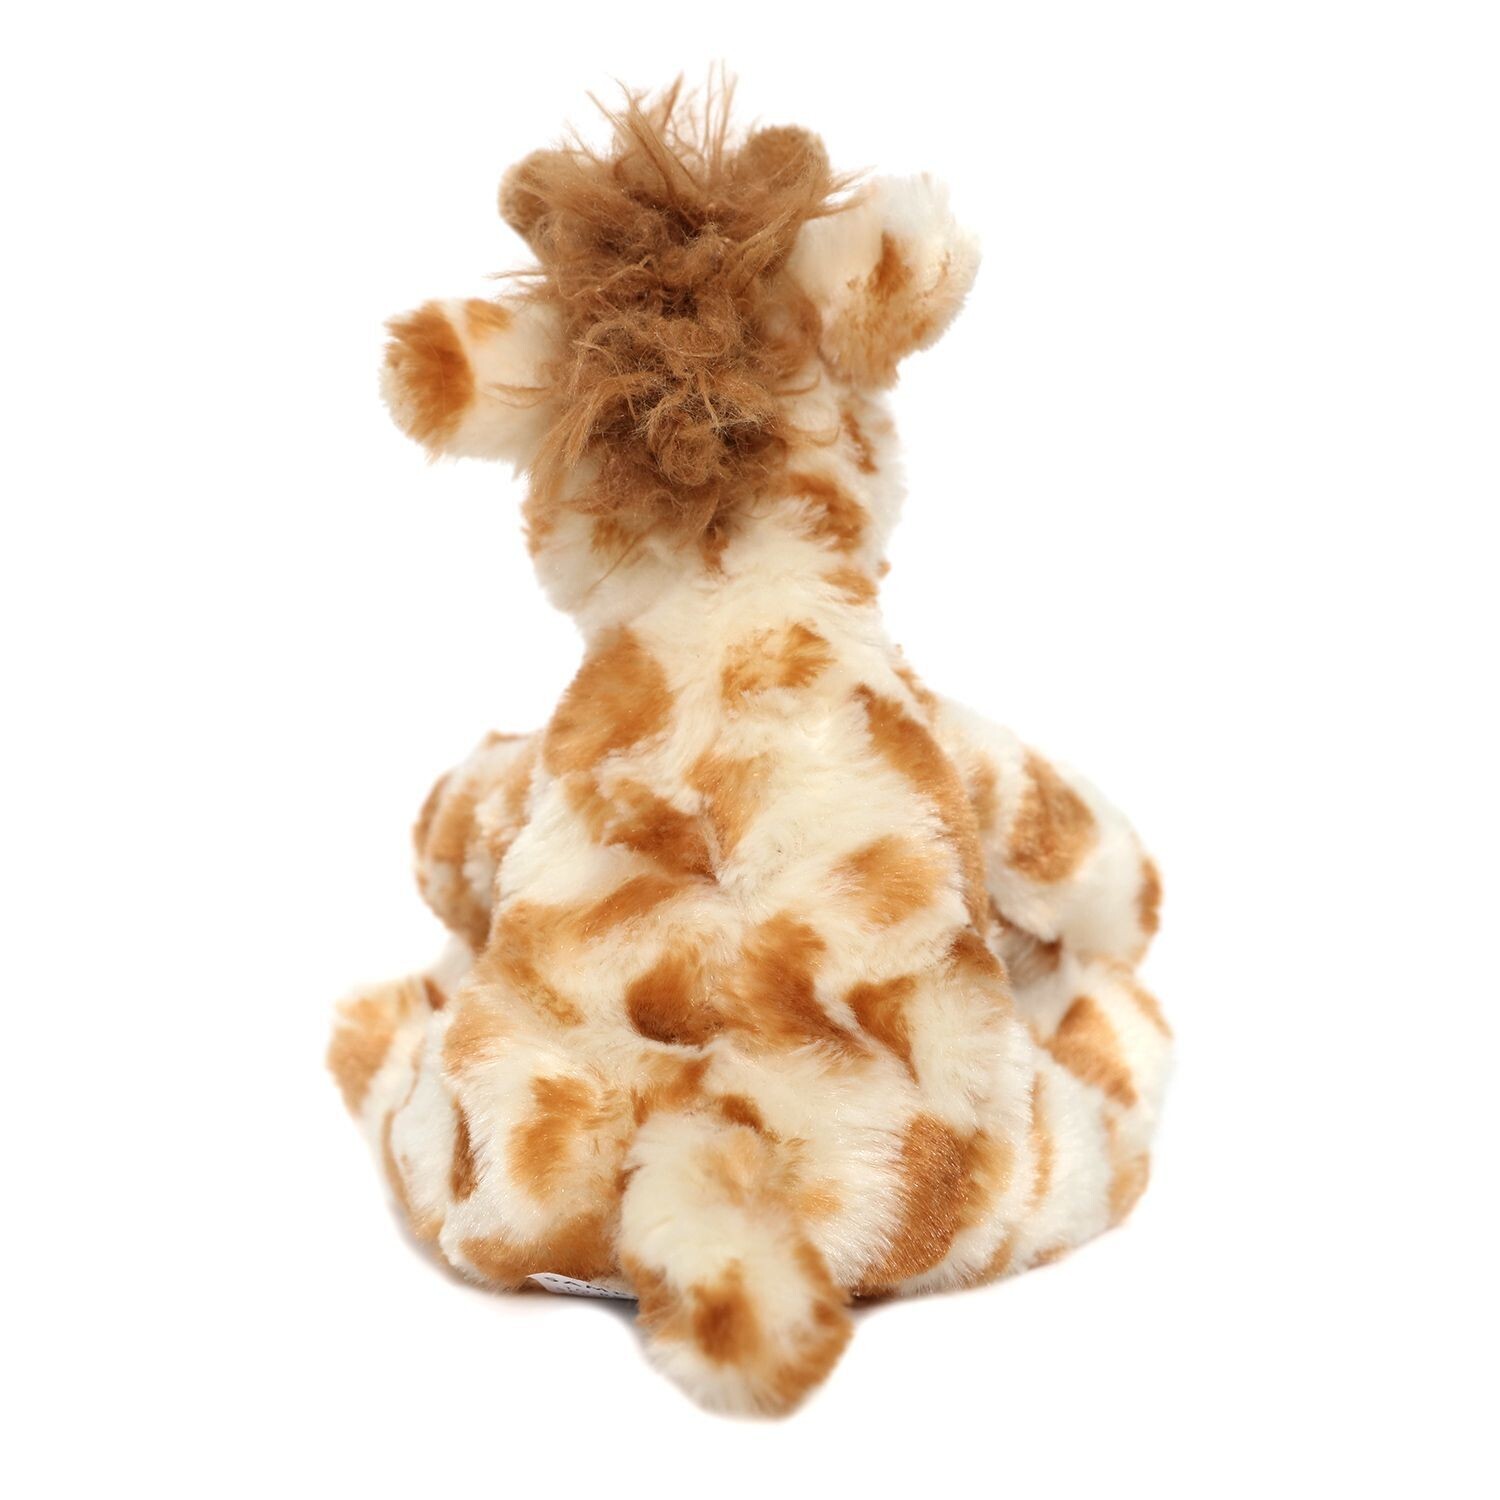 Baby Plush Giraffe Toy